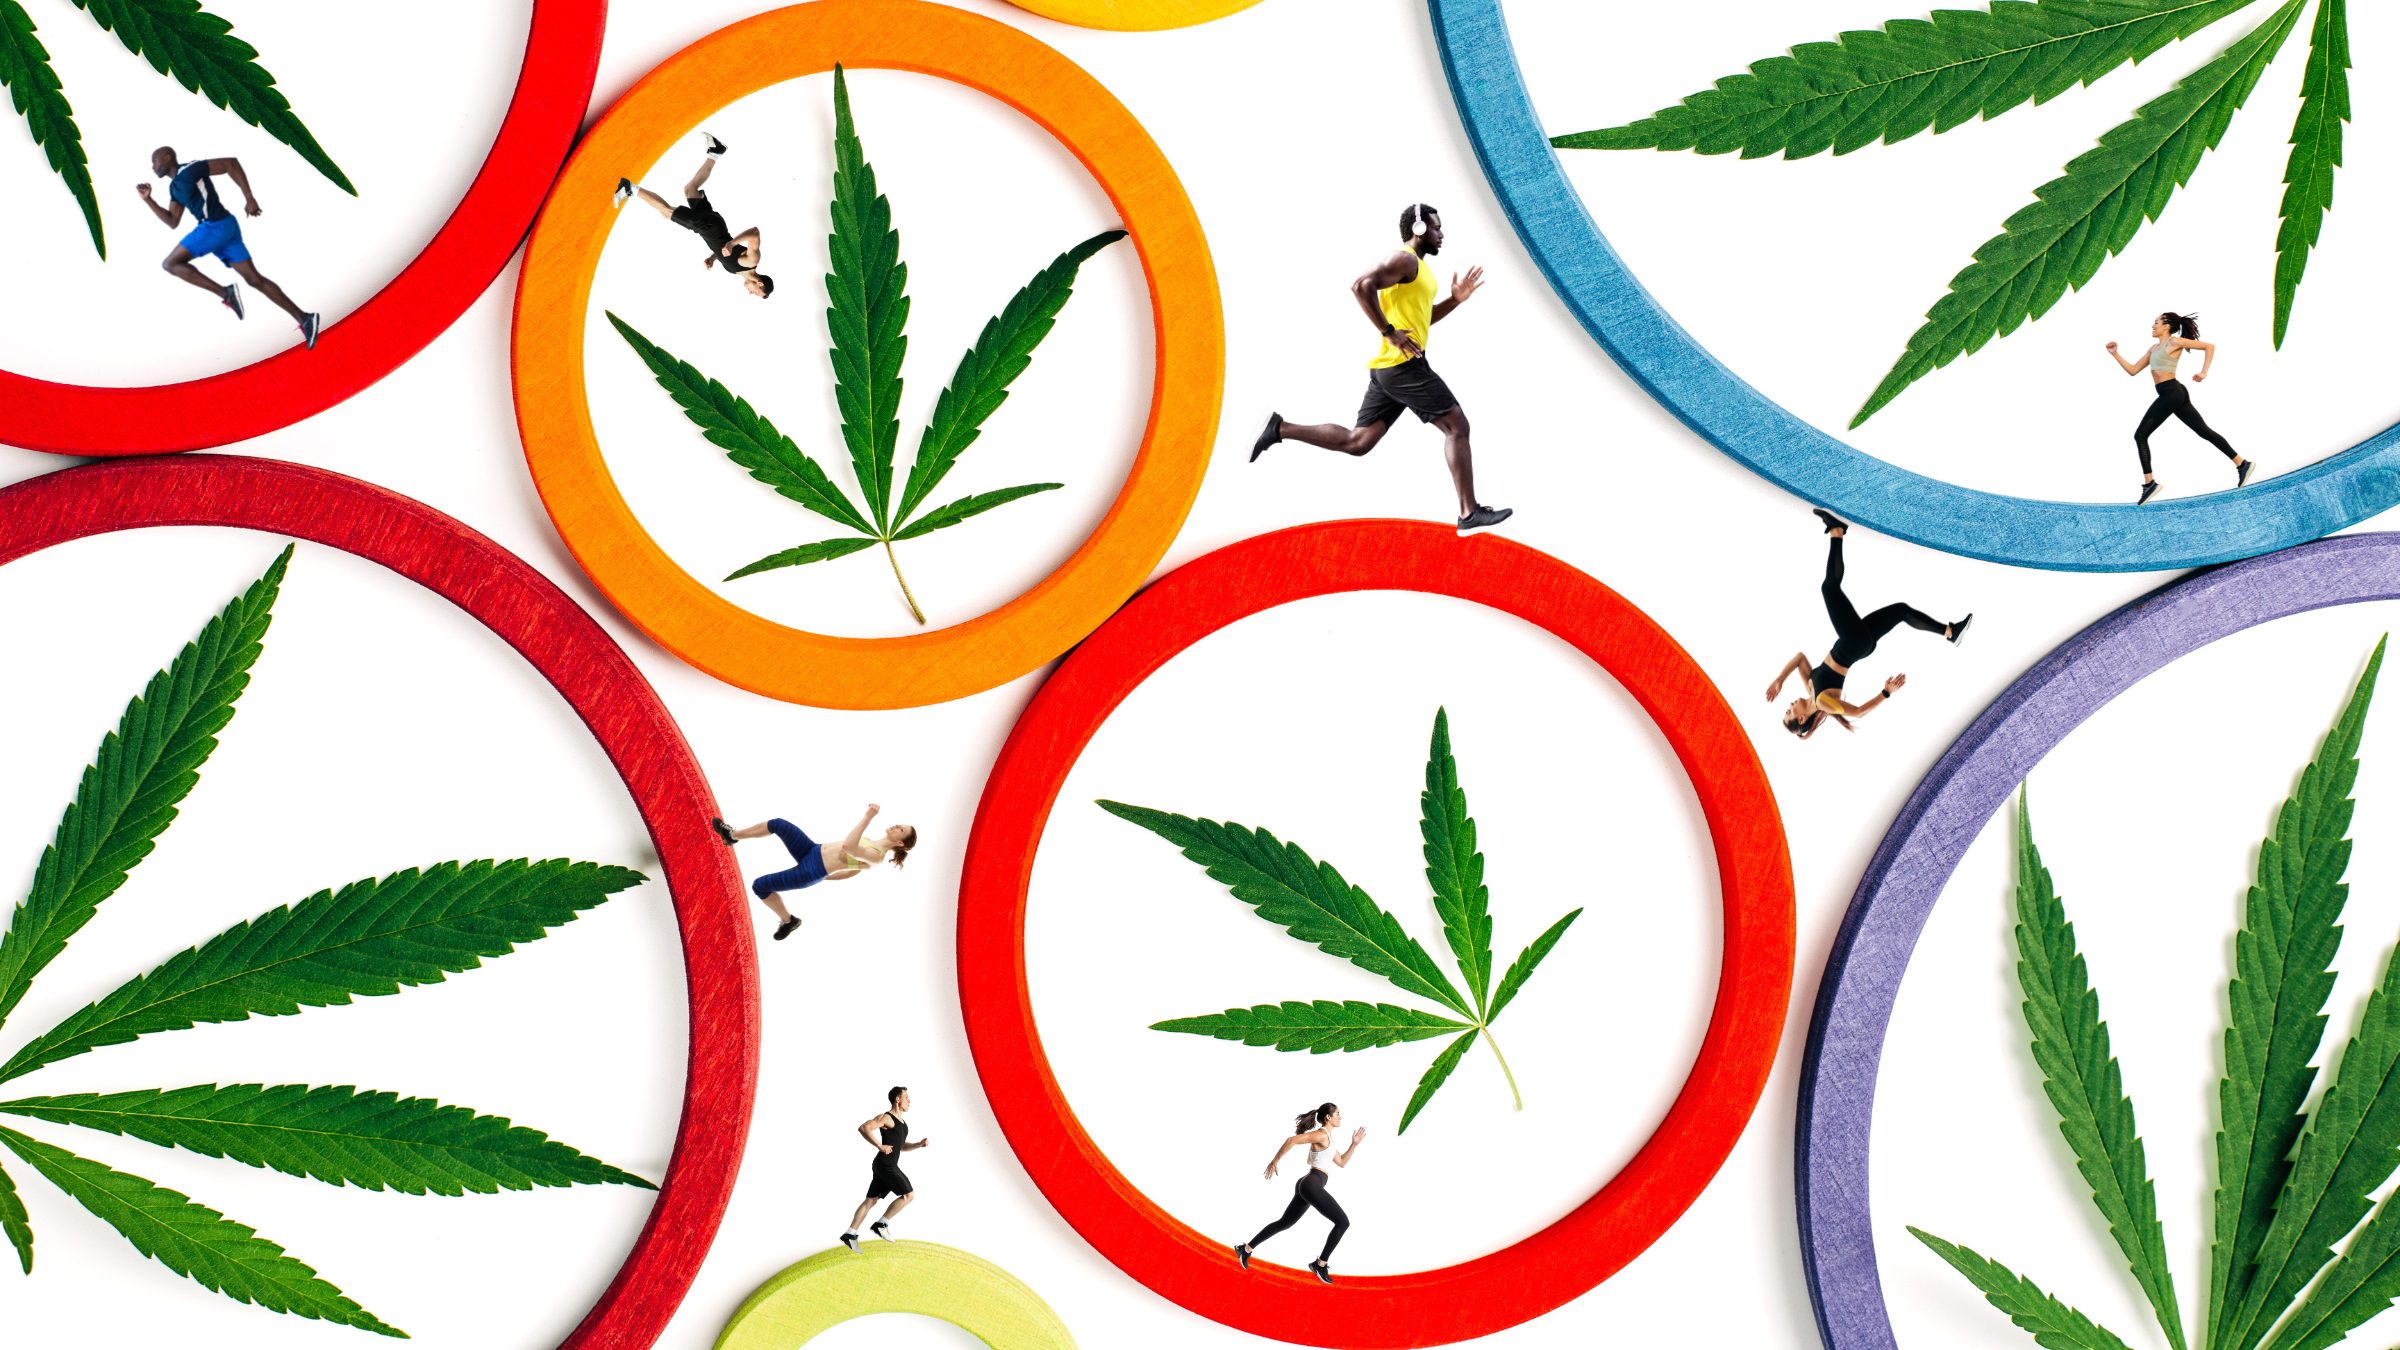 Playing Sports High on Marijuana